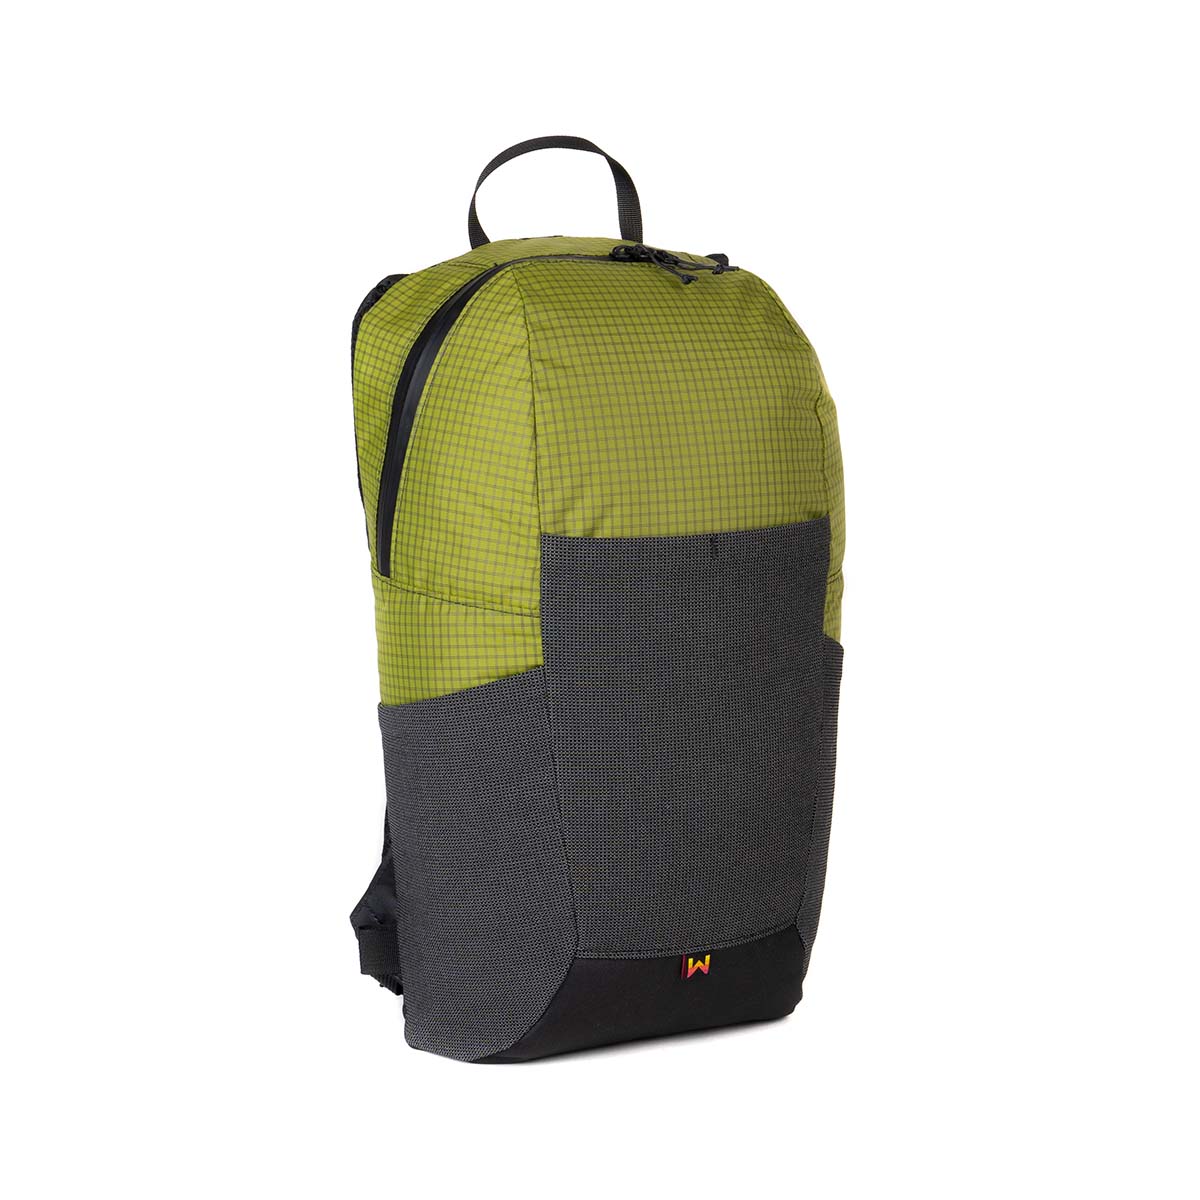 Sky Roll Black Travel Carry On Garment Bag Luggage Roll Shoulder Carry Case  | eBay